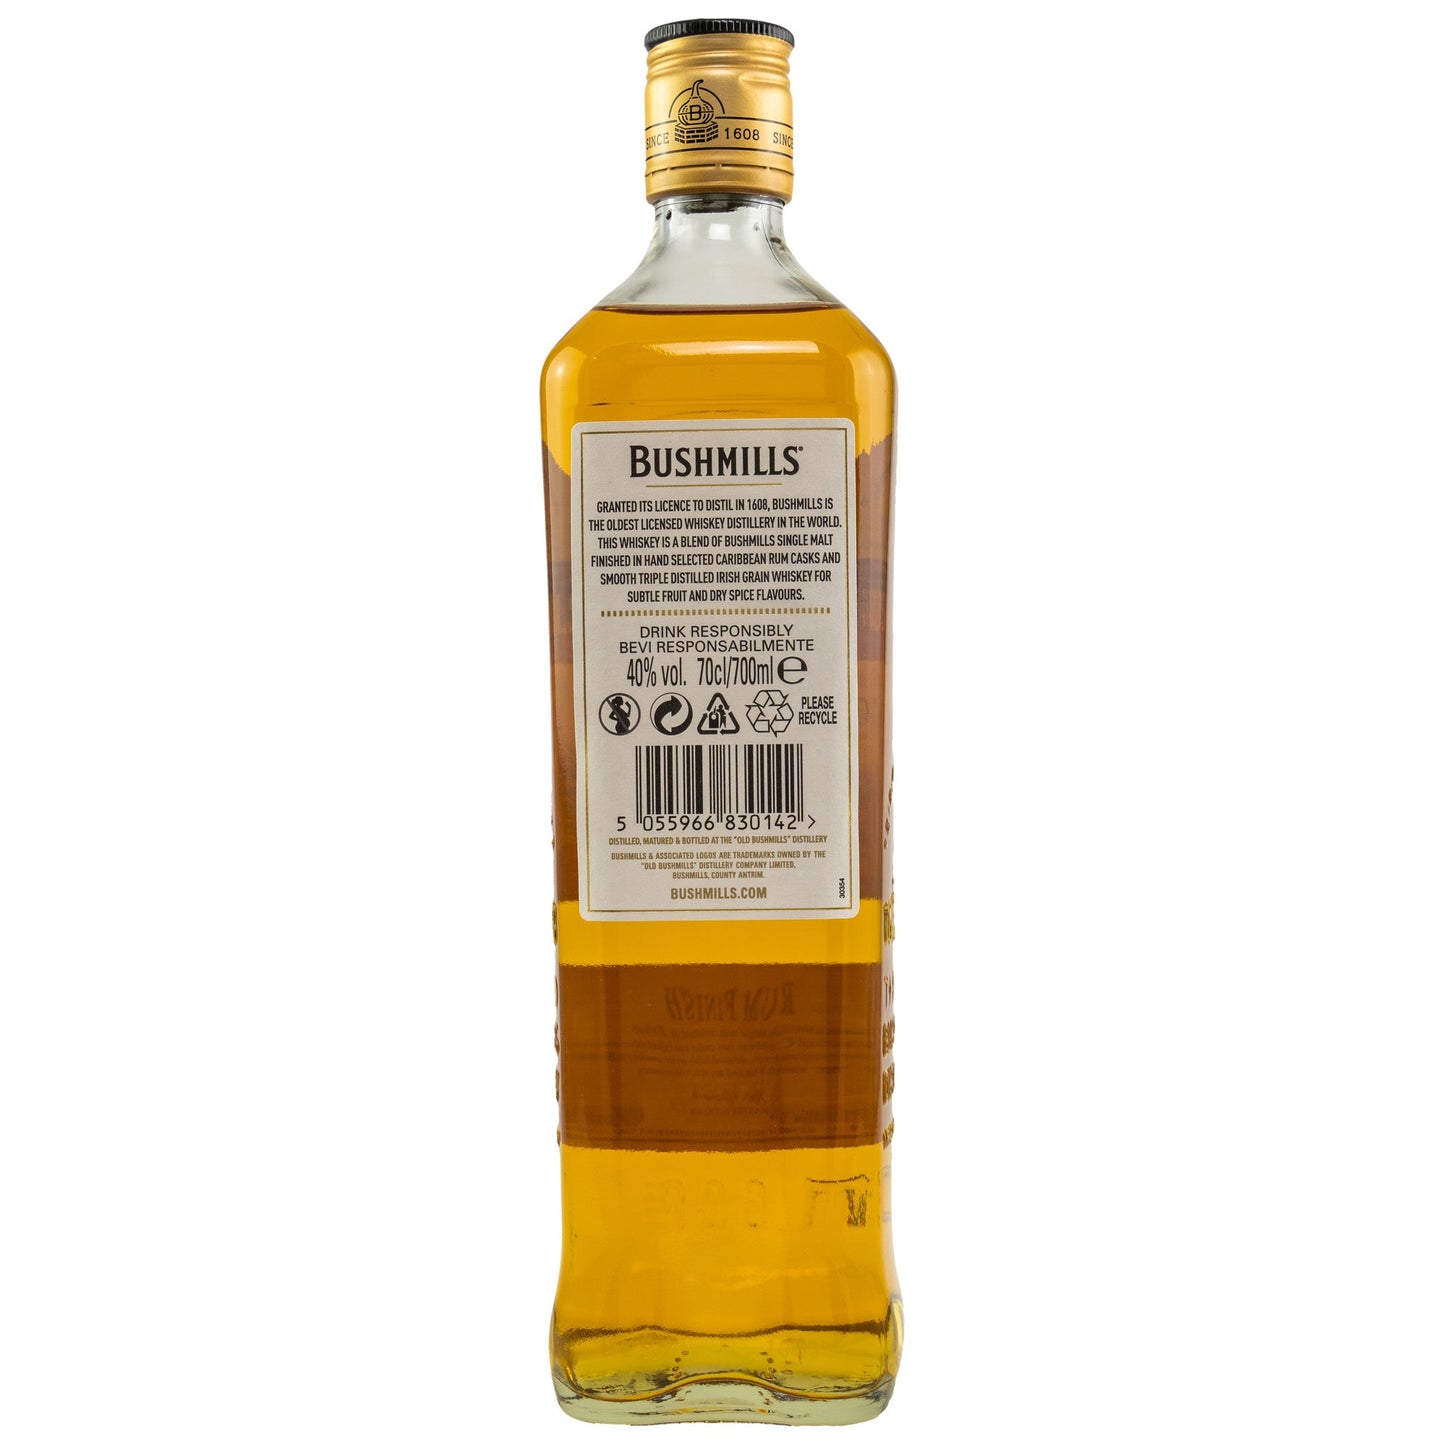 Bushmills | Caribbean Rum Cask Finish | Single Malt Irish Whiskey | 0,7l | 40%GET A BOTTLE